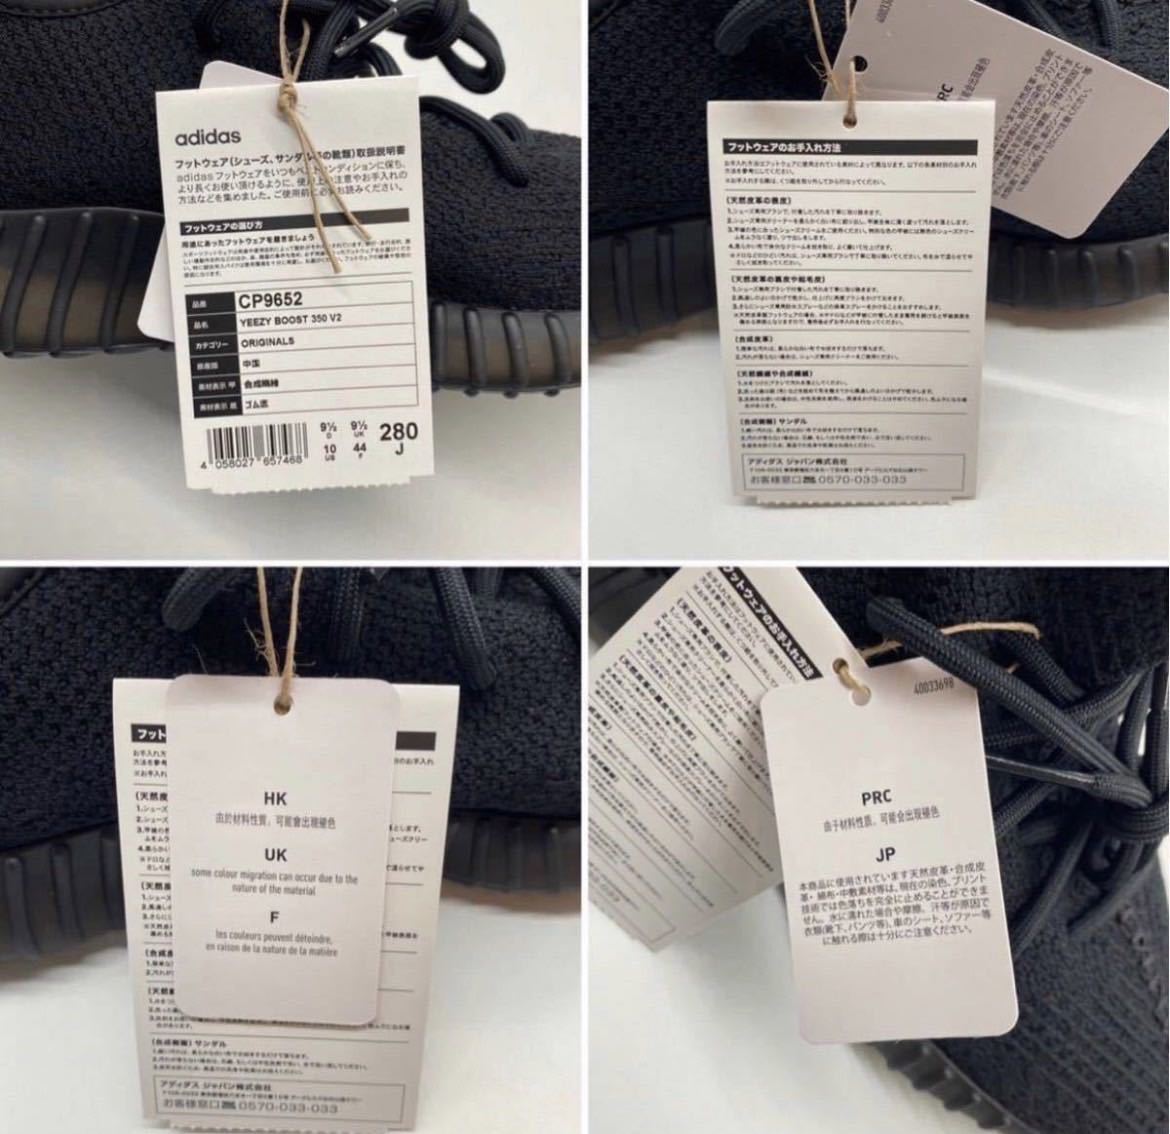 【28cm】新品 adidas YEEZY BOOST 350 V2 CORE BLACK アディダス イージー ブースト 350 V2 ブラック (CP9652) 1204_画像9